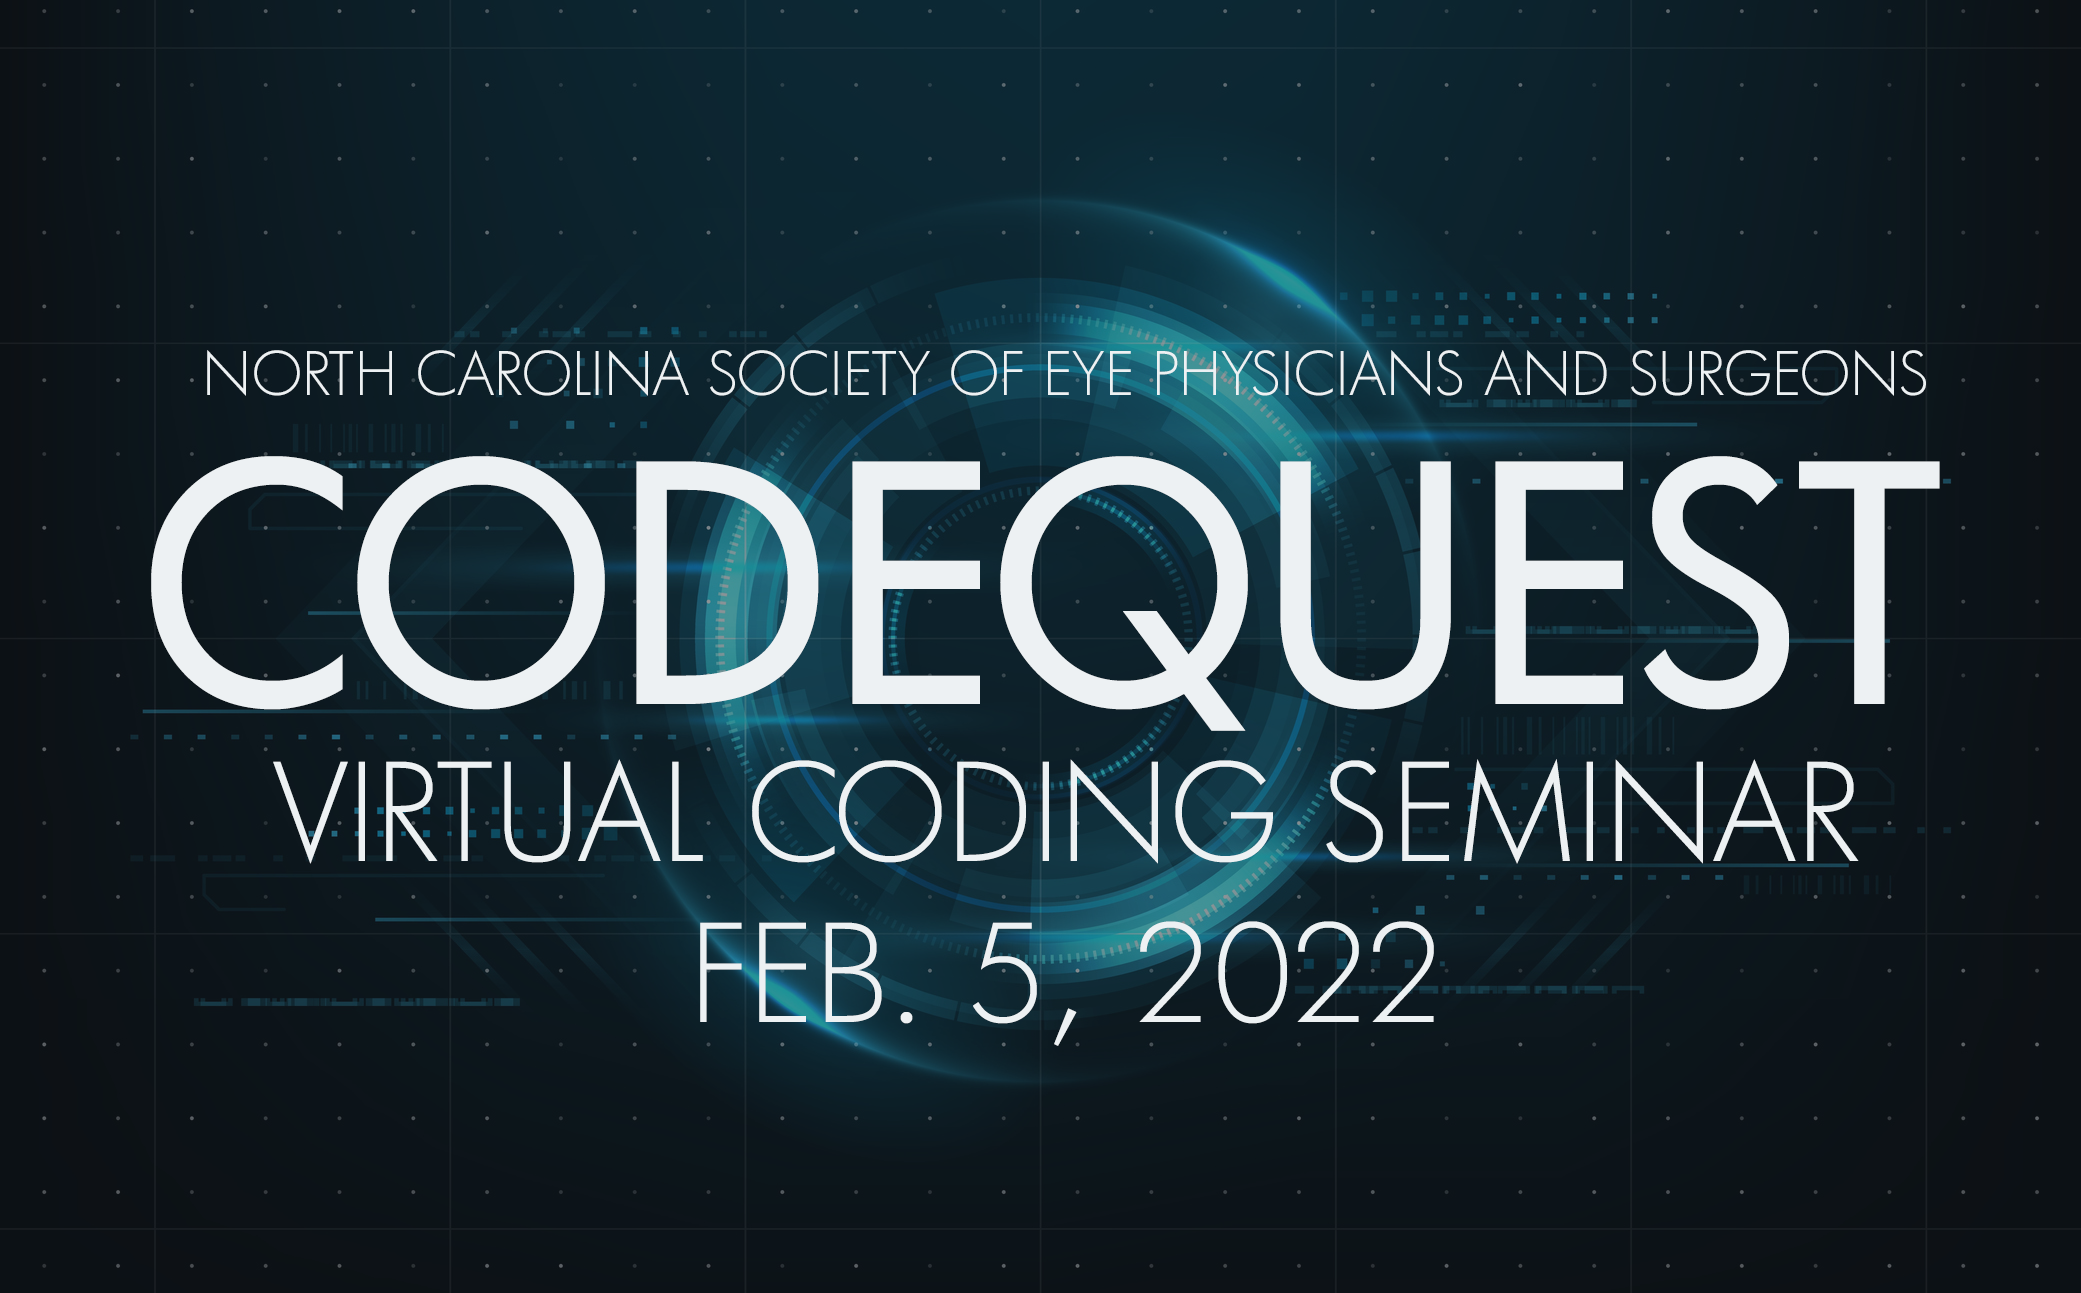 Codequest coding seminar 2022